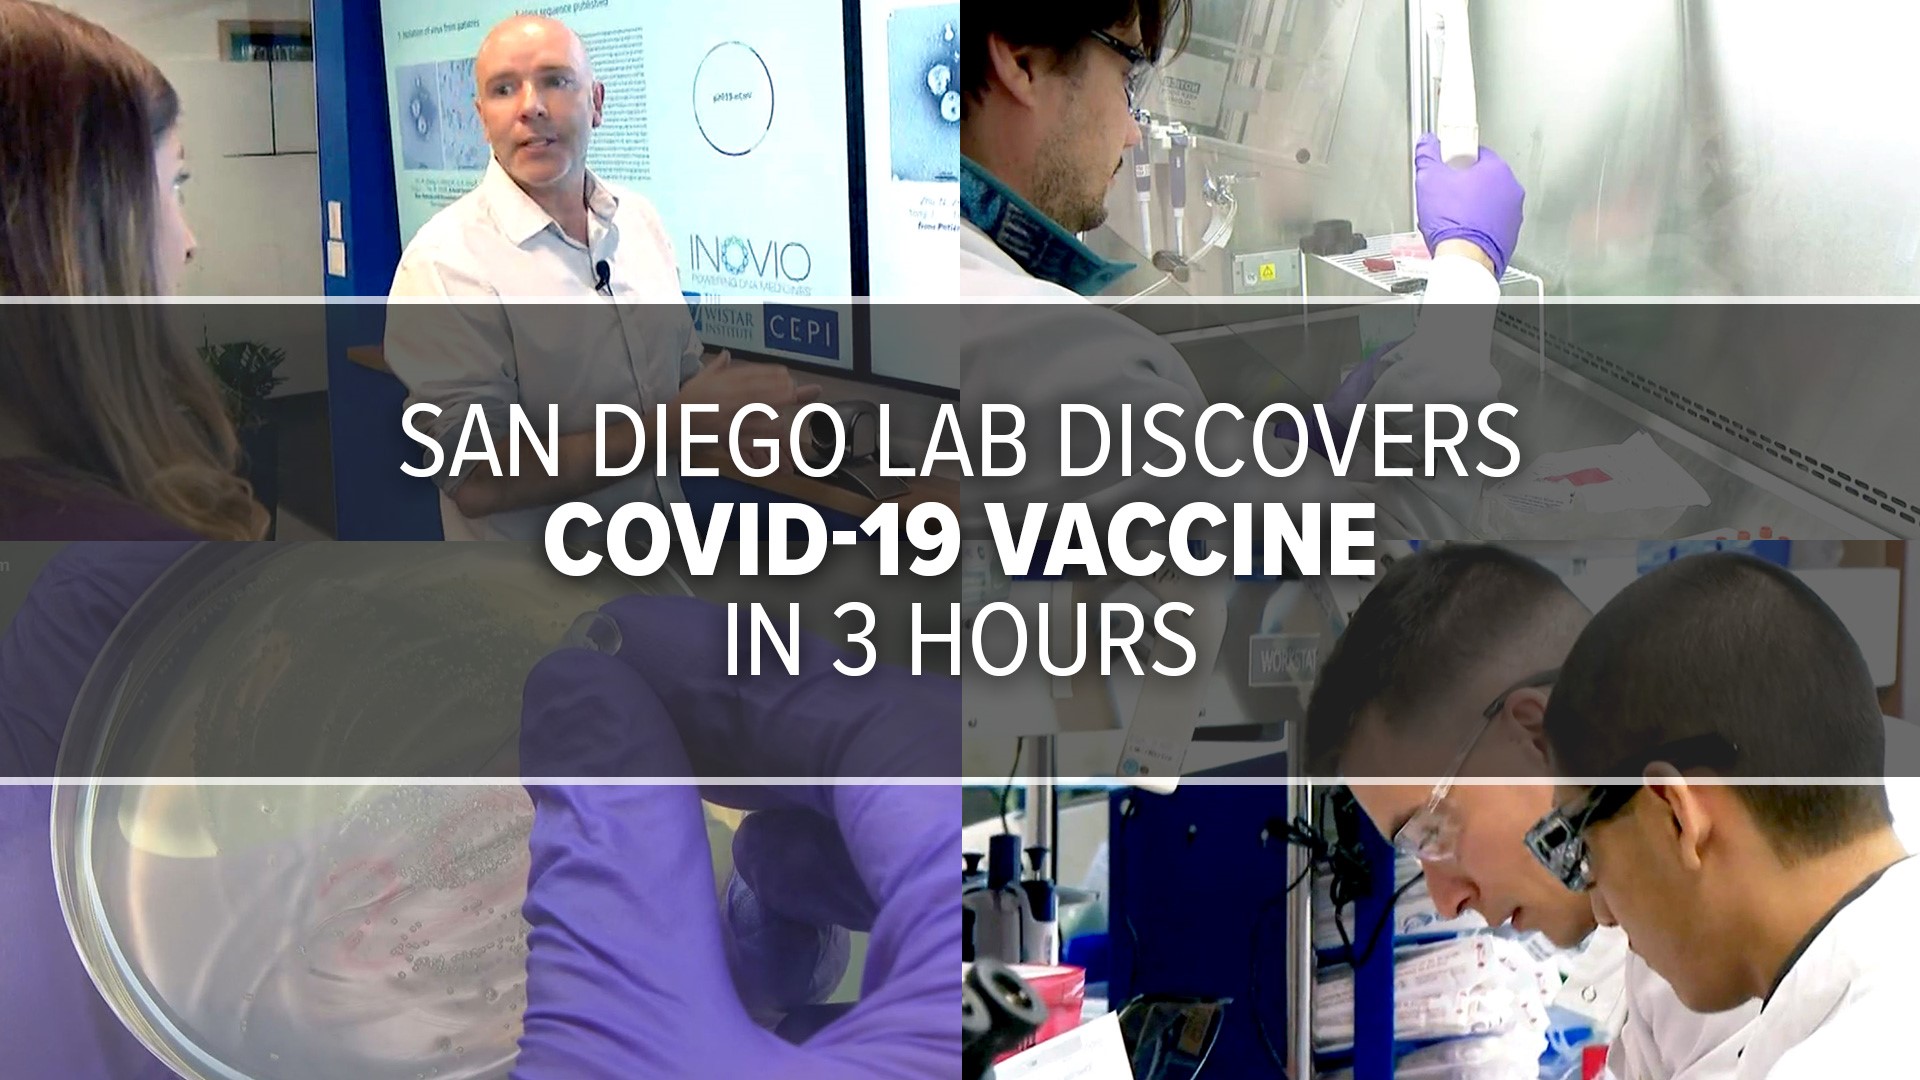 Inovio Pharmaceuticals created a vaccine that is going through pre-clinical trials.